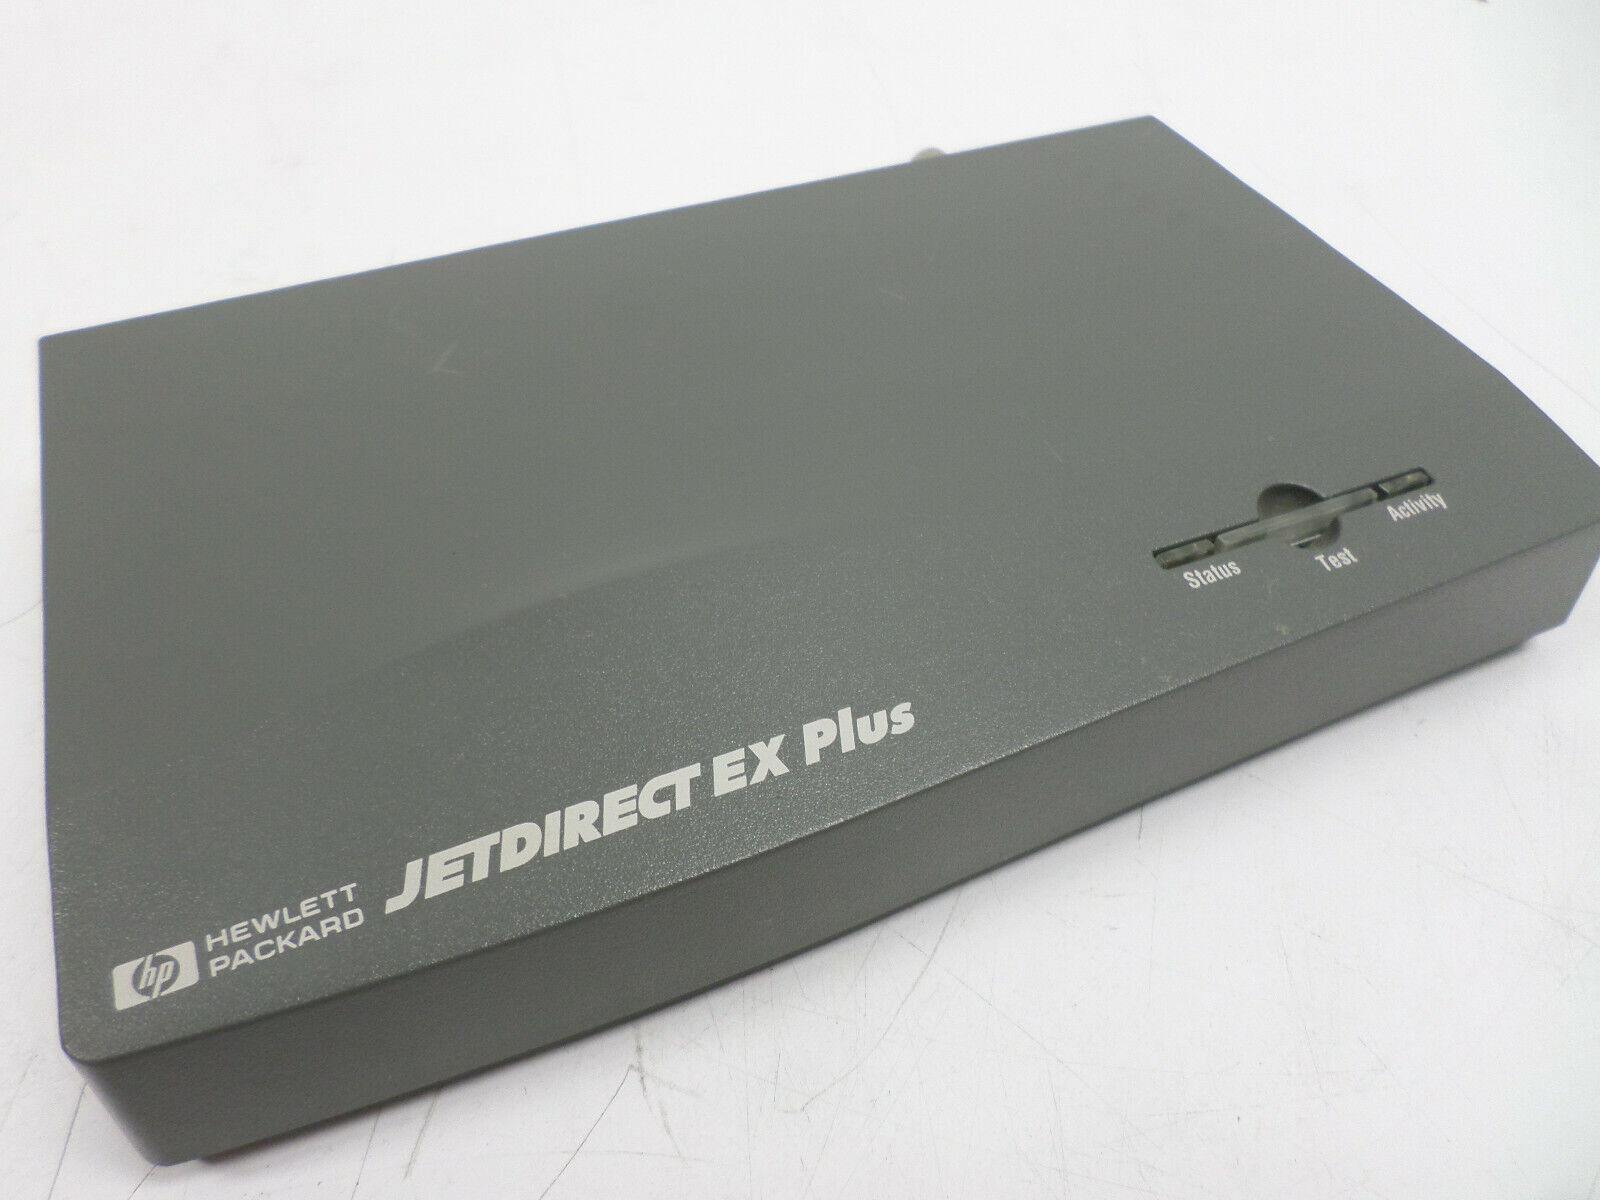 HP Jetdirect EX PLUS J2591A Network Print Server